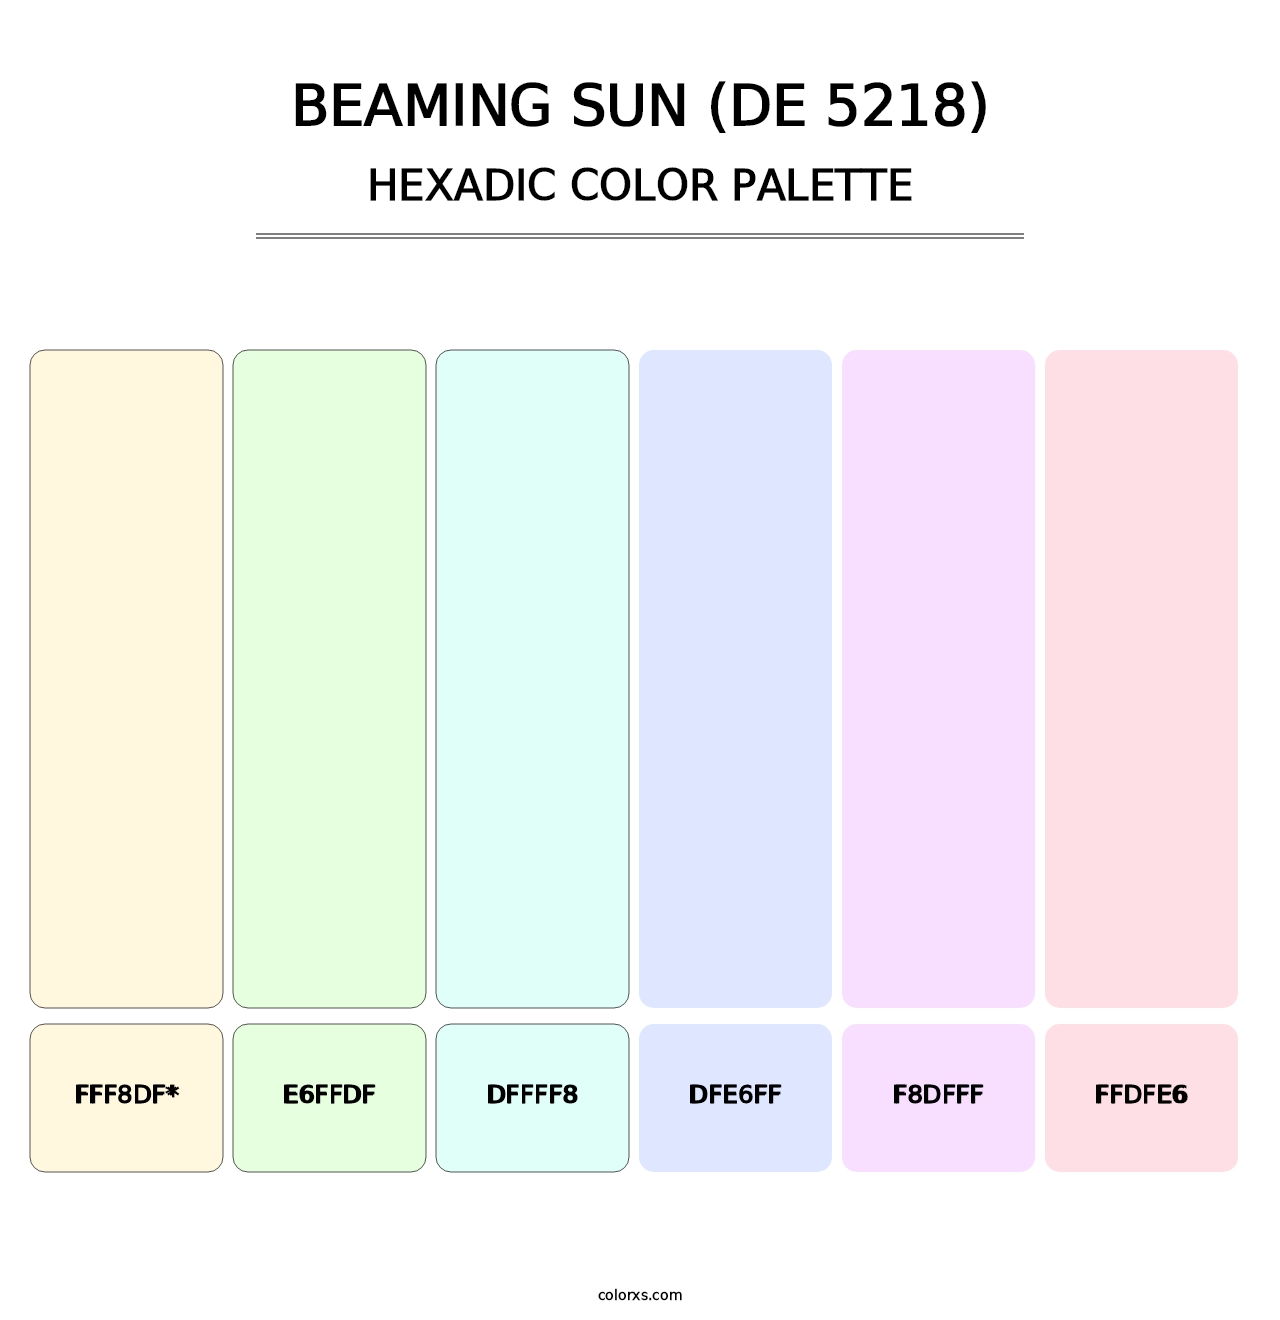 Beaming Sun (DE 5218) - Hexadic Color Palette